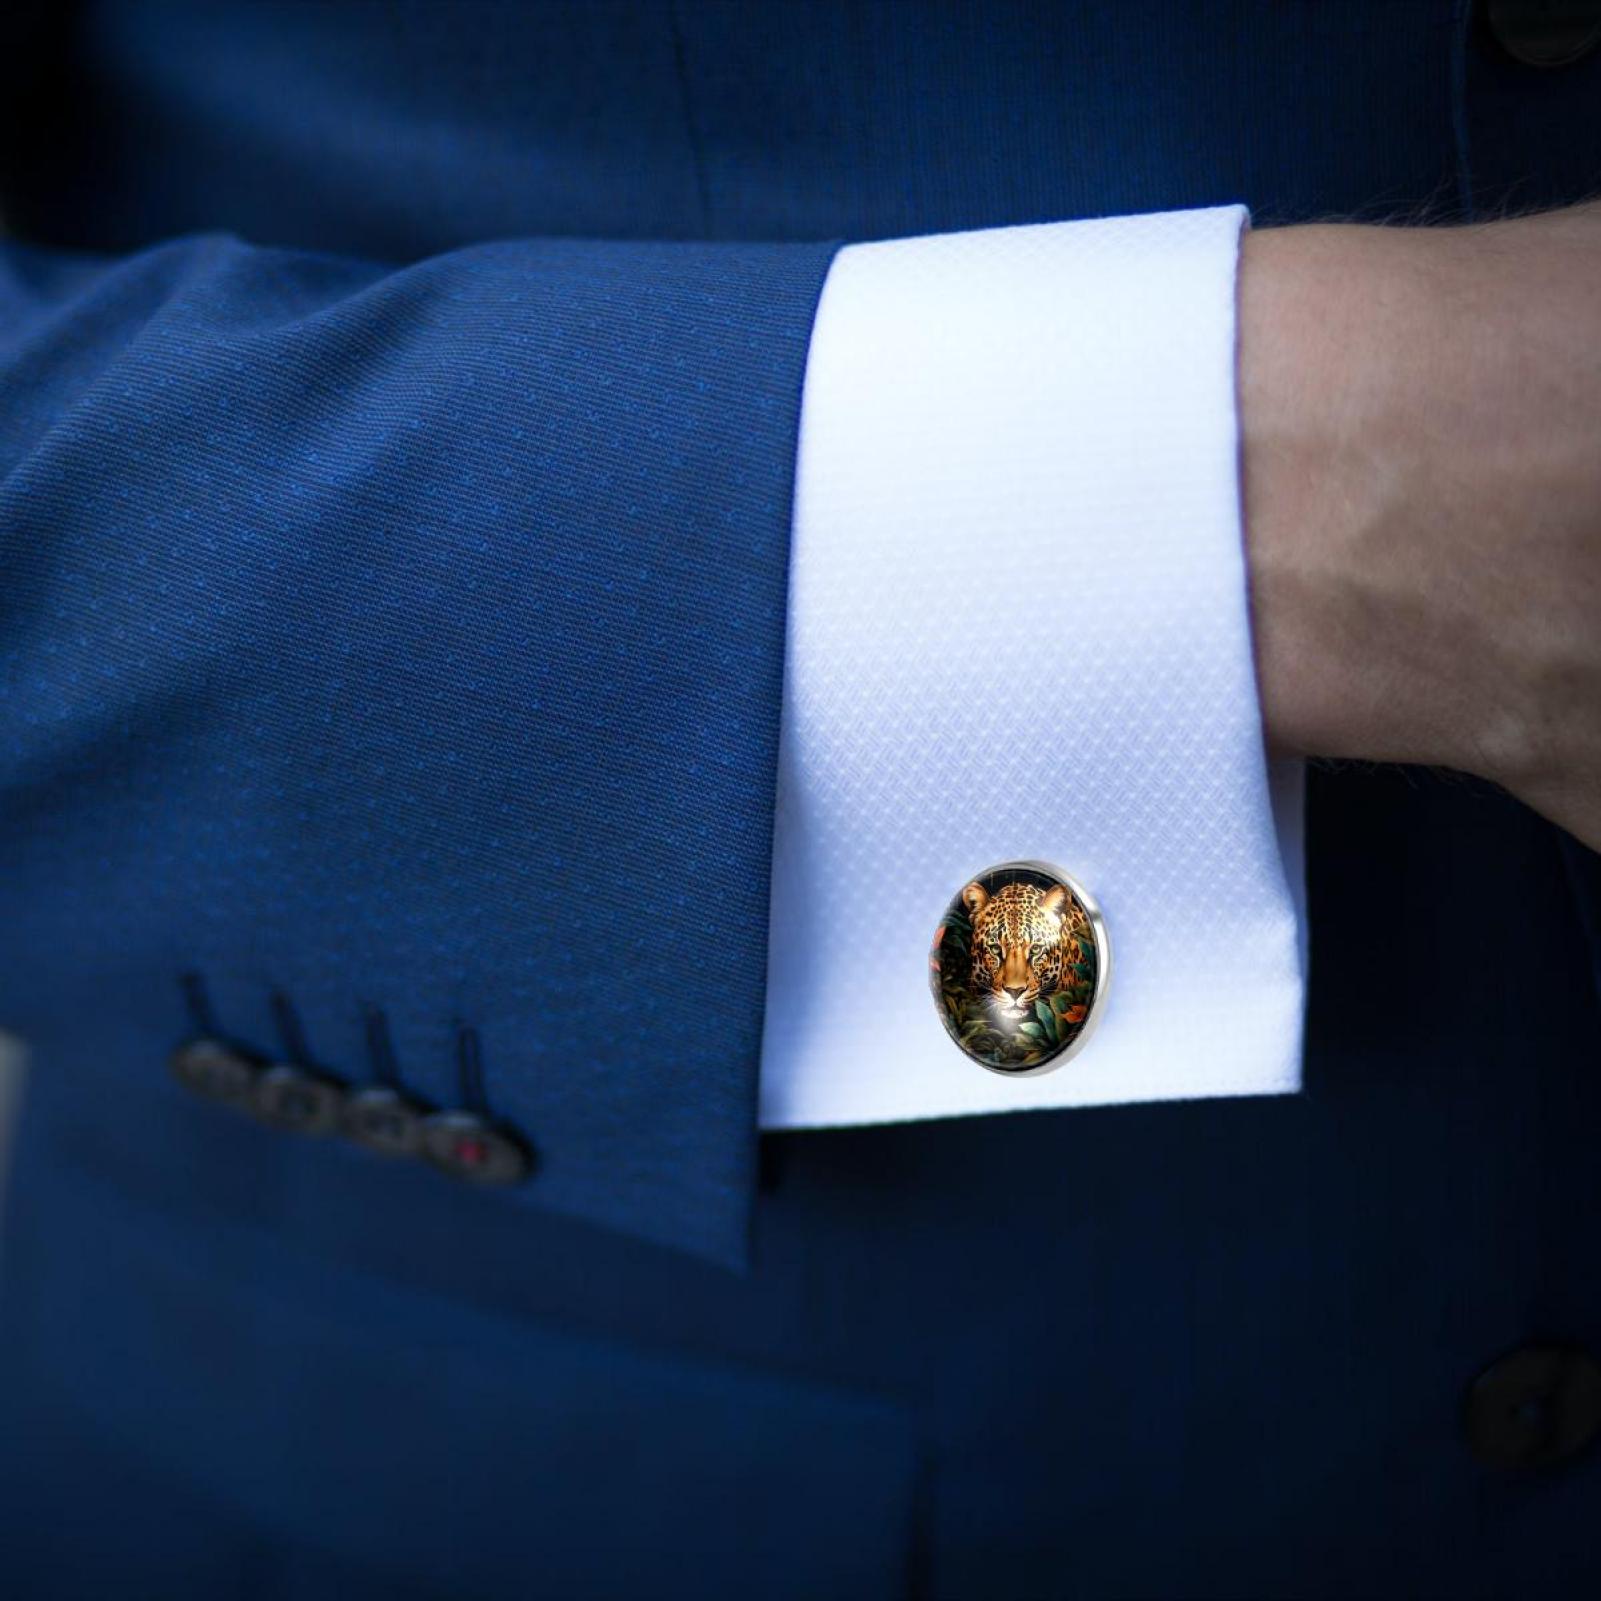 Leopard Premium Stainless Steel Cufflink Sets for Men - Ideal for Dress ...